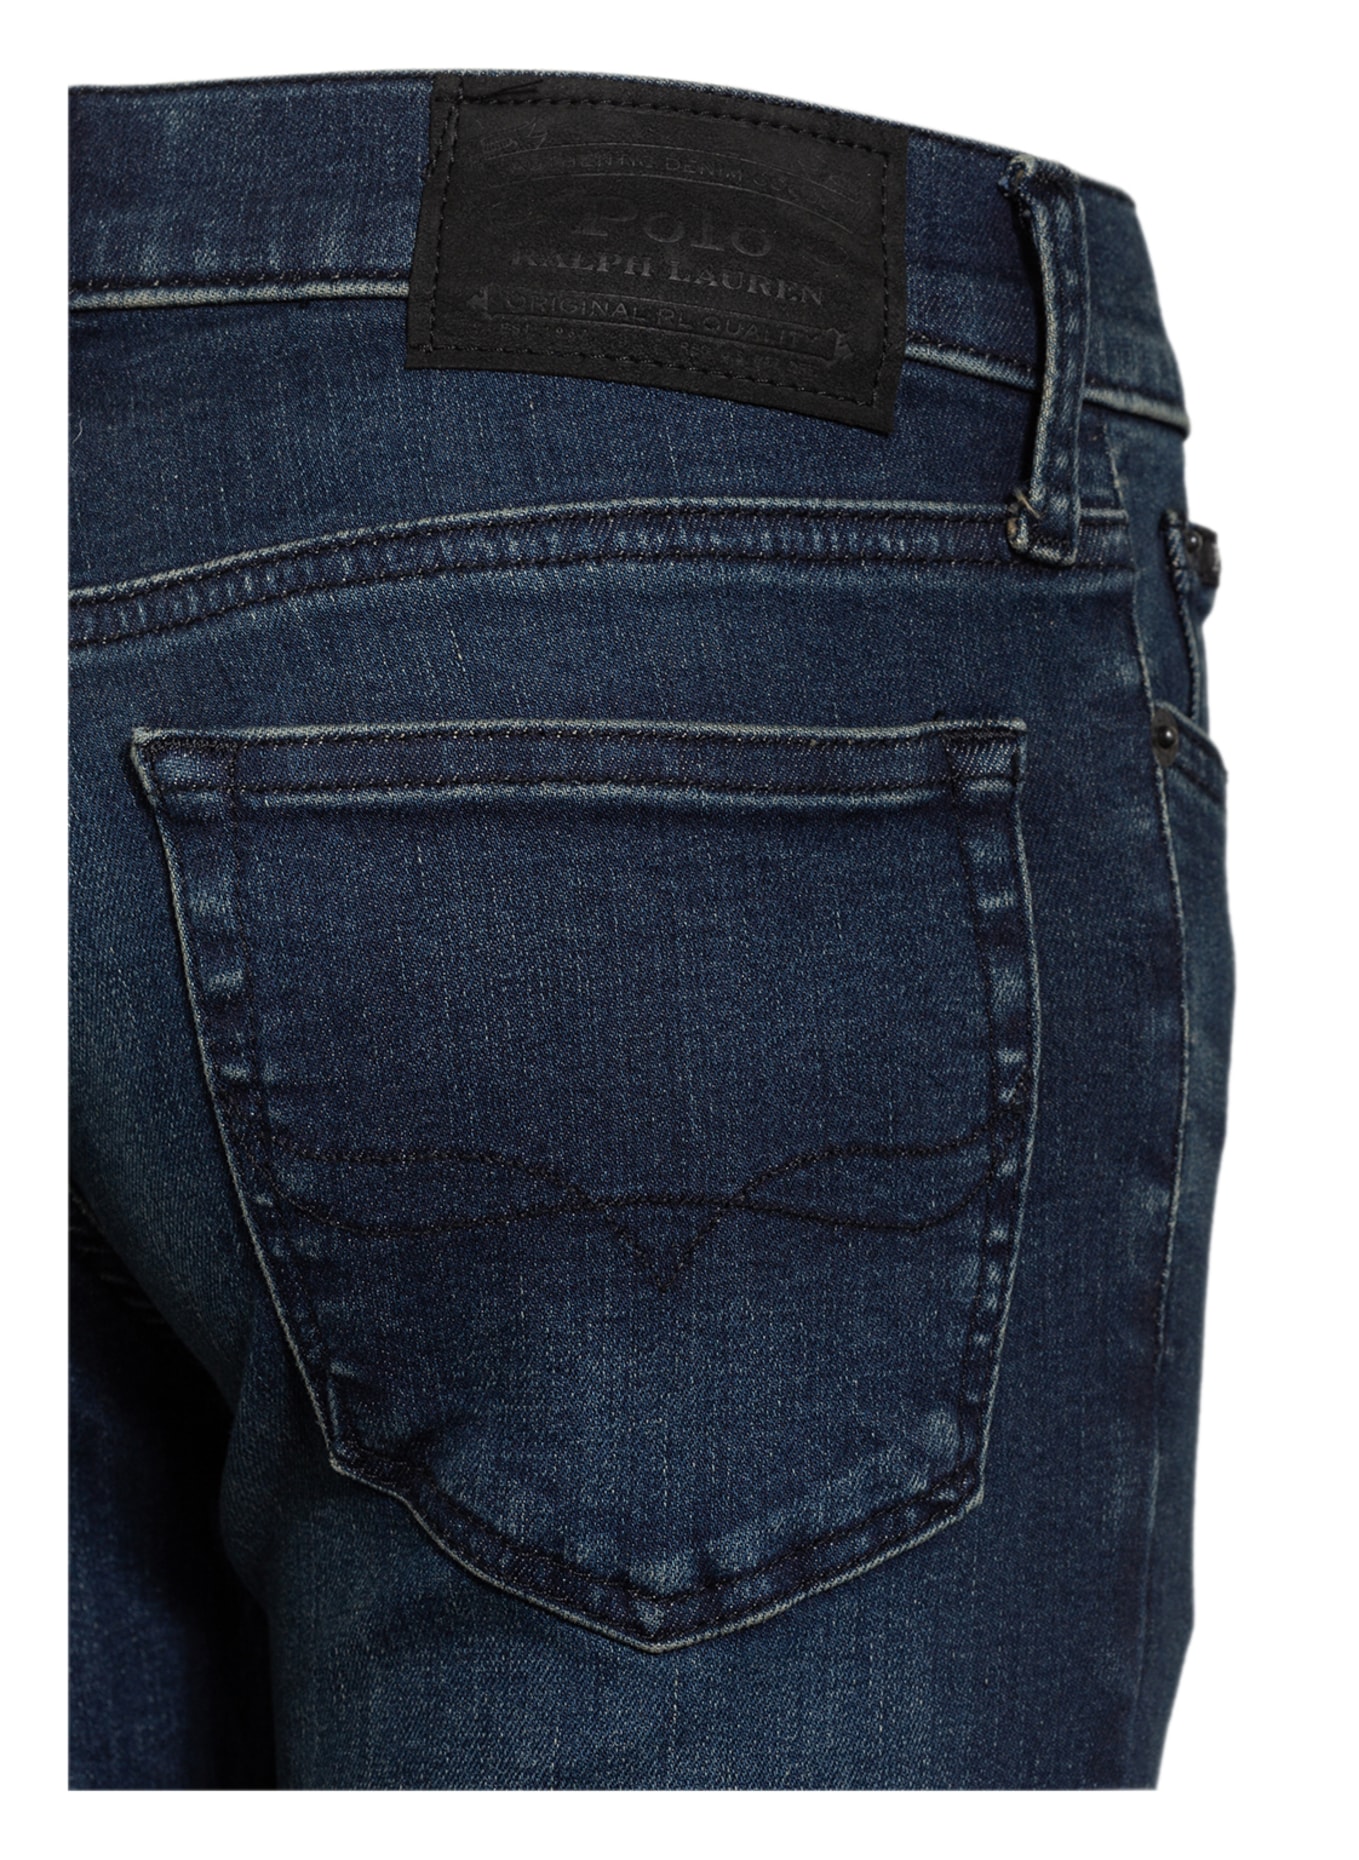 POLO RALPH LAUREN Jeans ELDRIDGE Skinny Fit , Farbe: 001 painted washed (Bild 3)